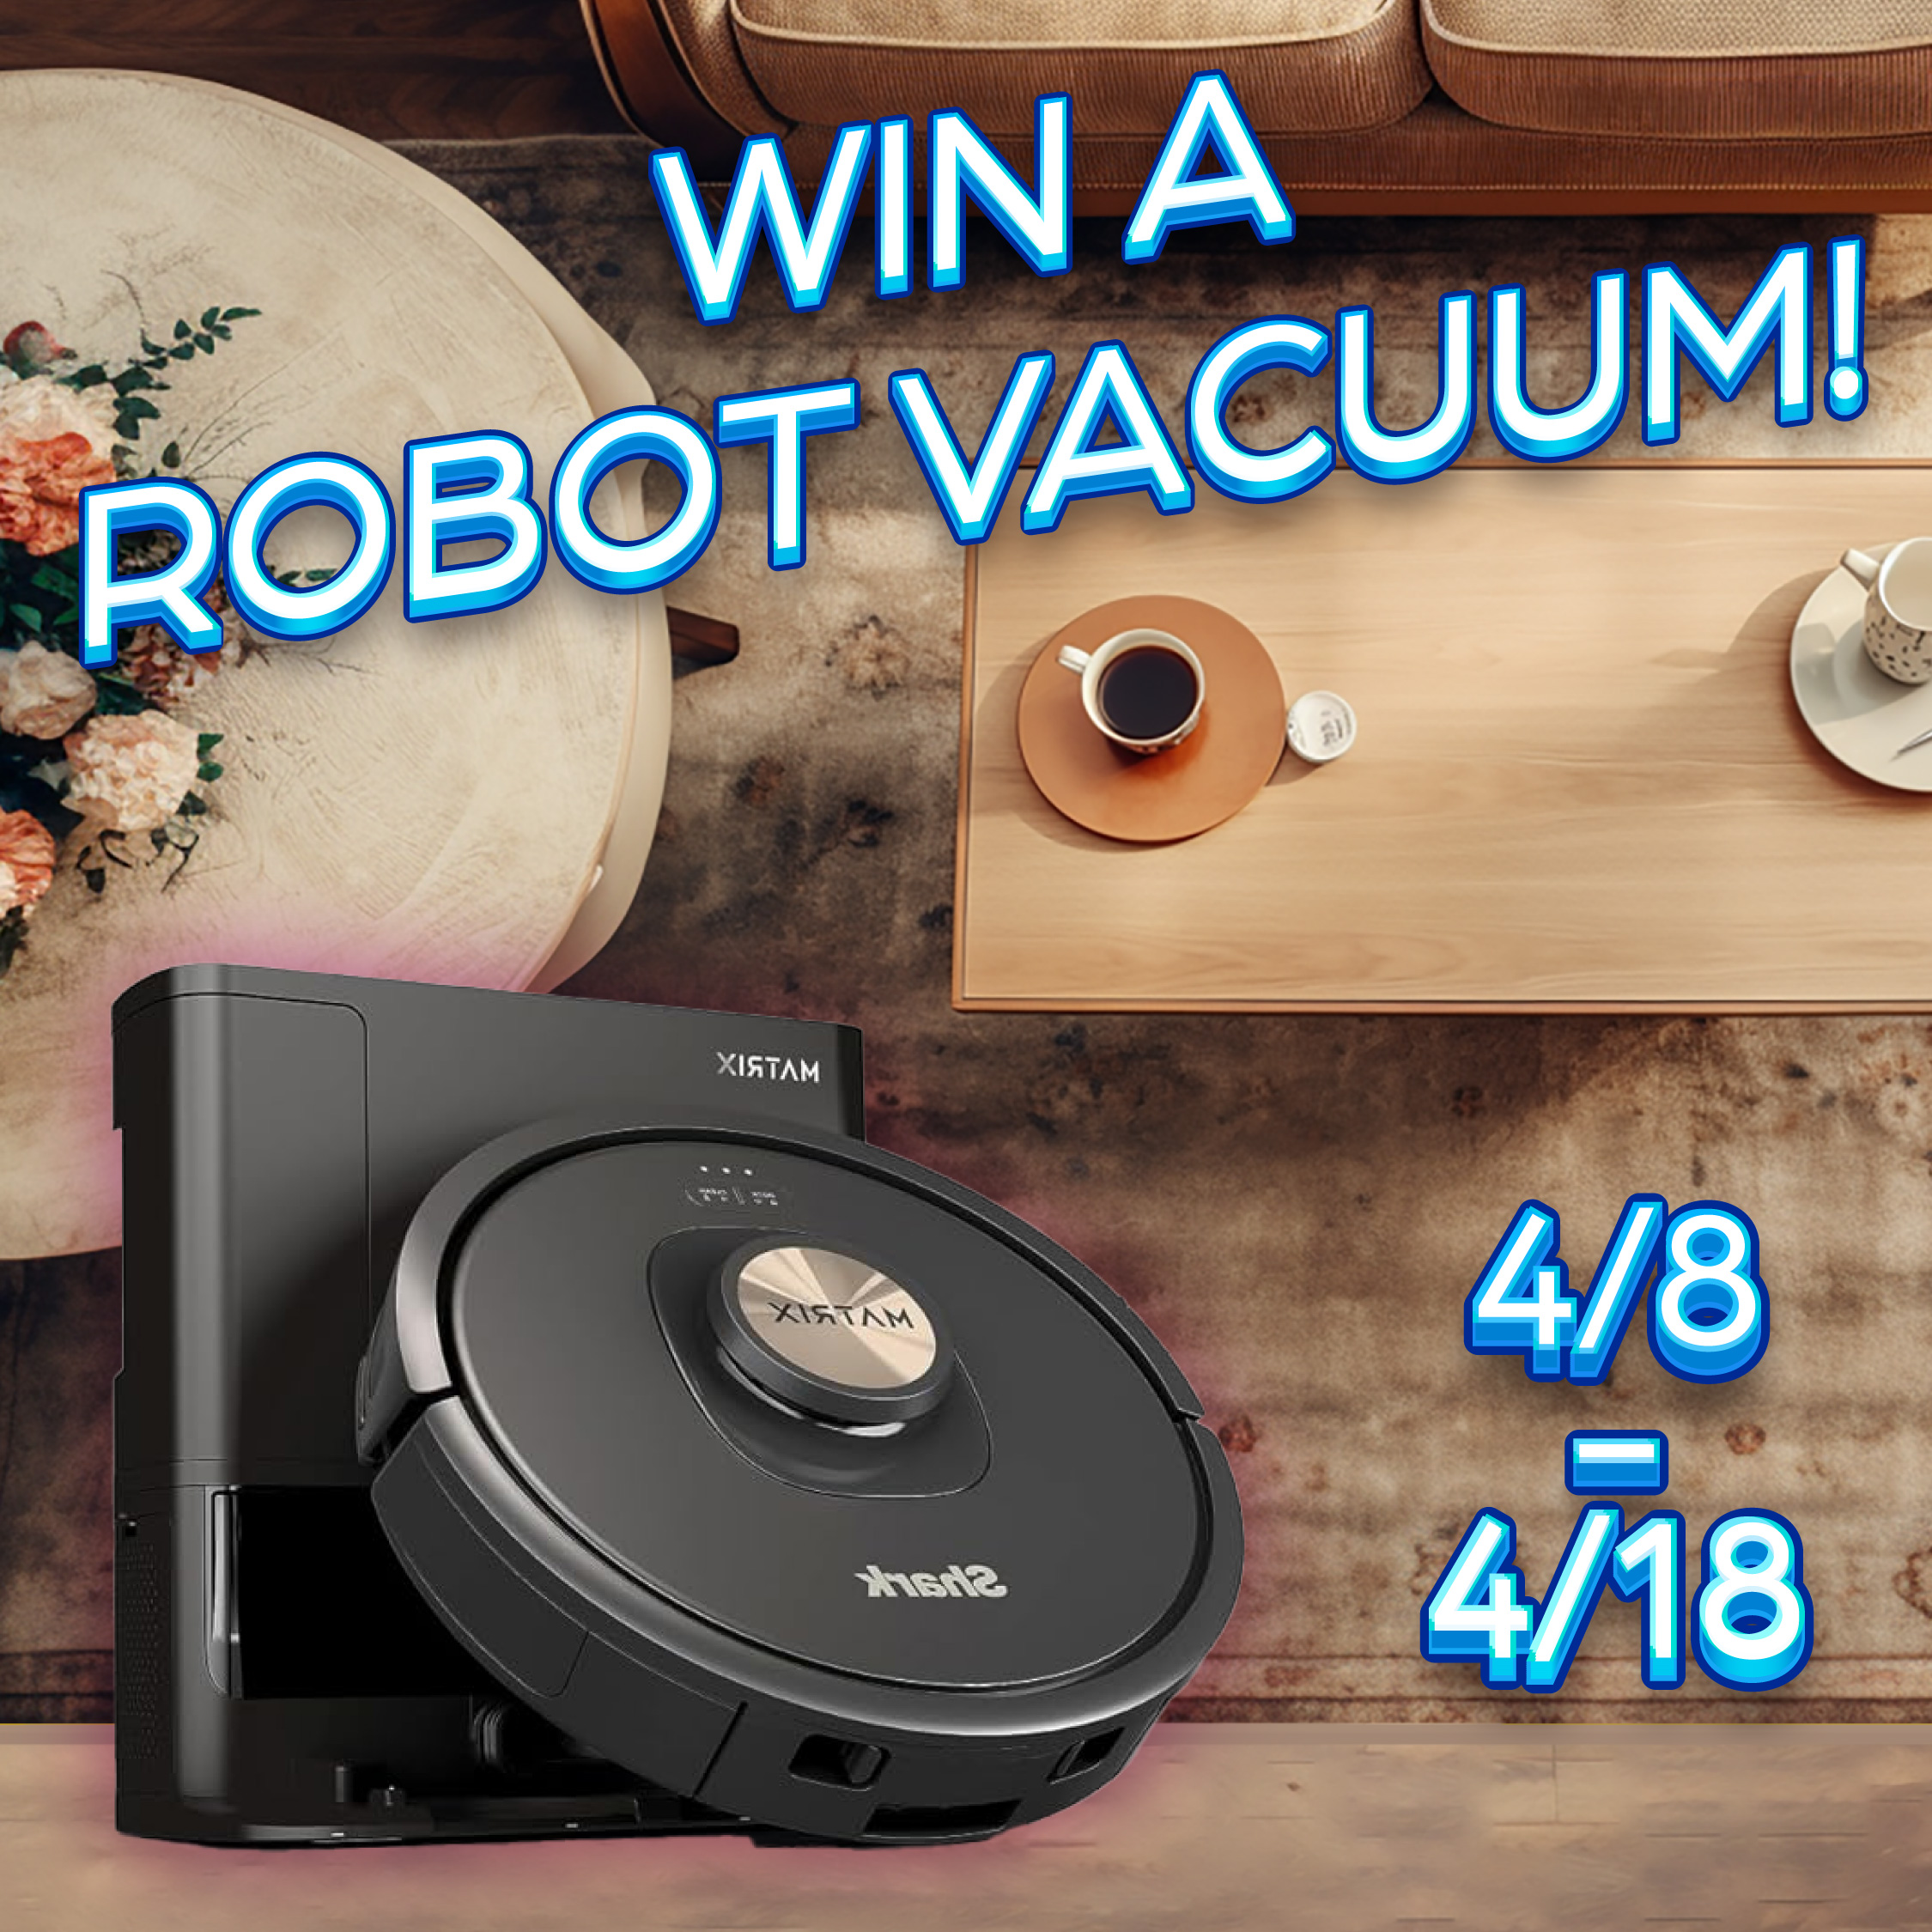 Win a Robot Vacuum! Image